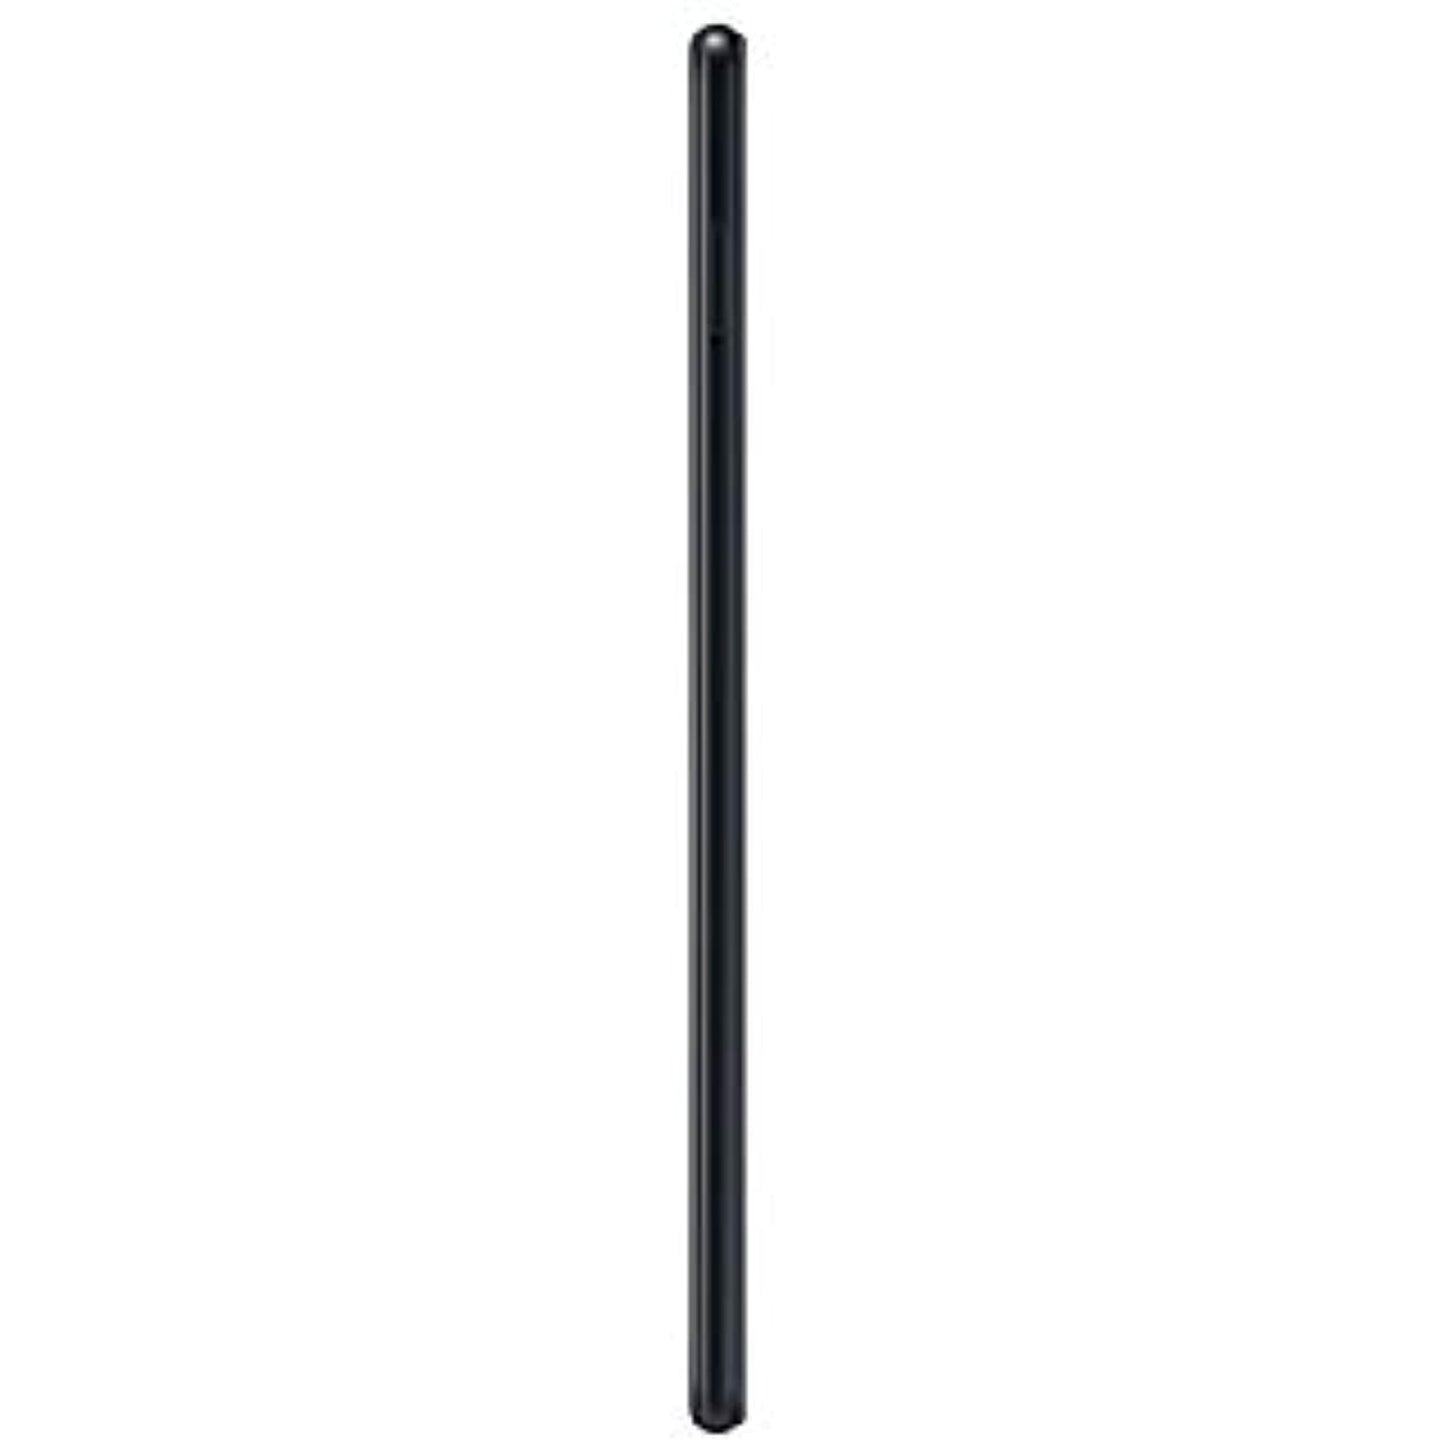 Galaxy 8 Inch Tablet A- SAMSUNG -32 GB WIFI Android 9.0 Pie Tablet 2019 Black - A Horizon Dawn